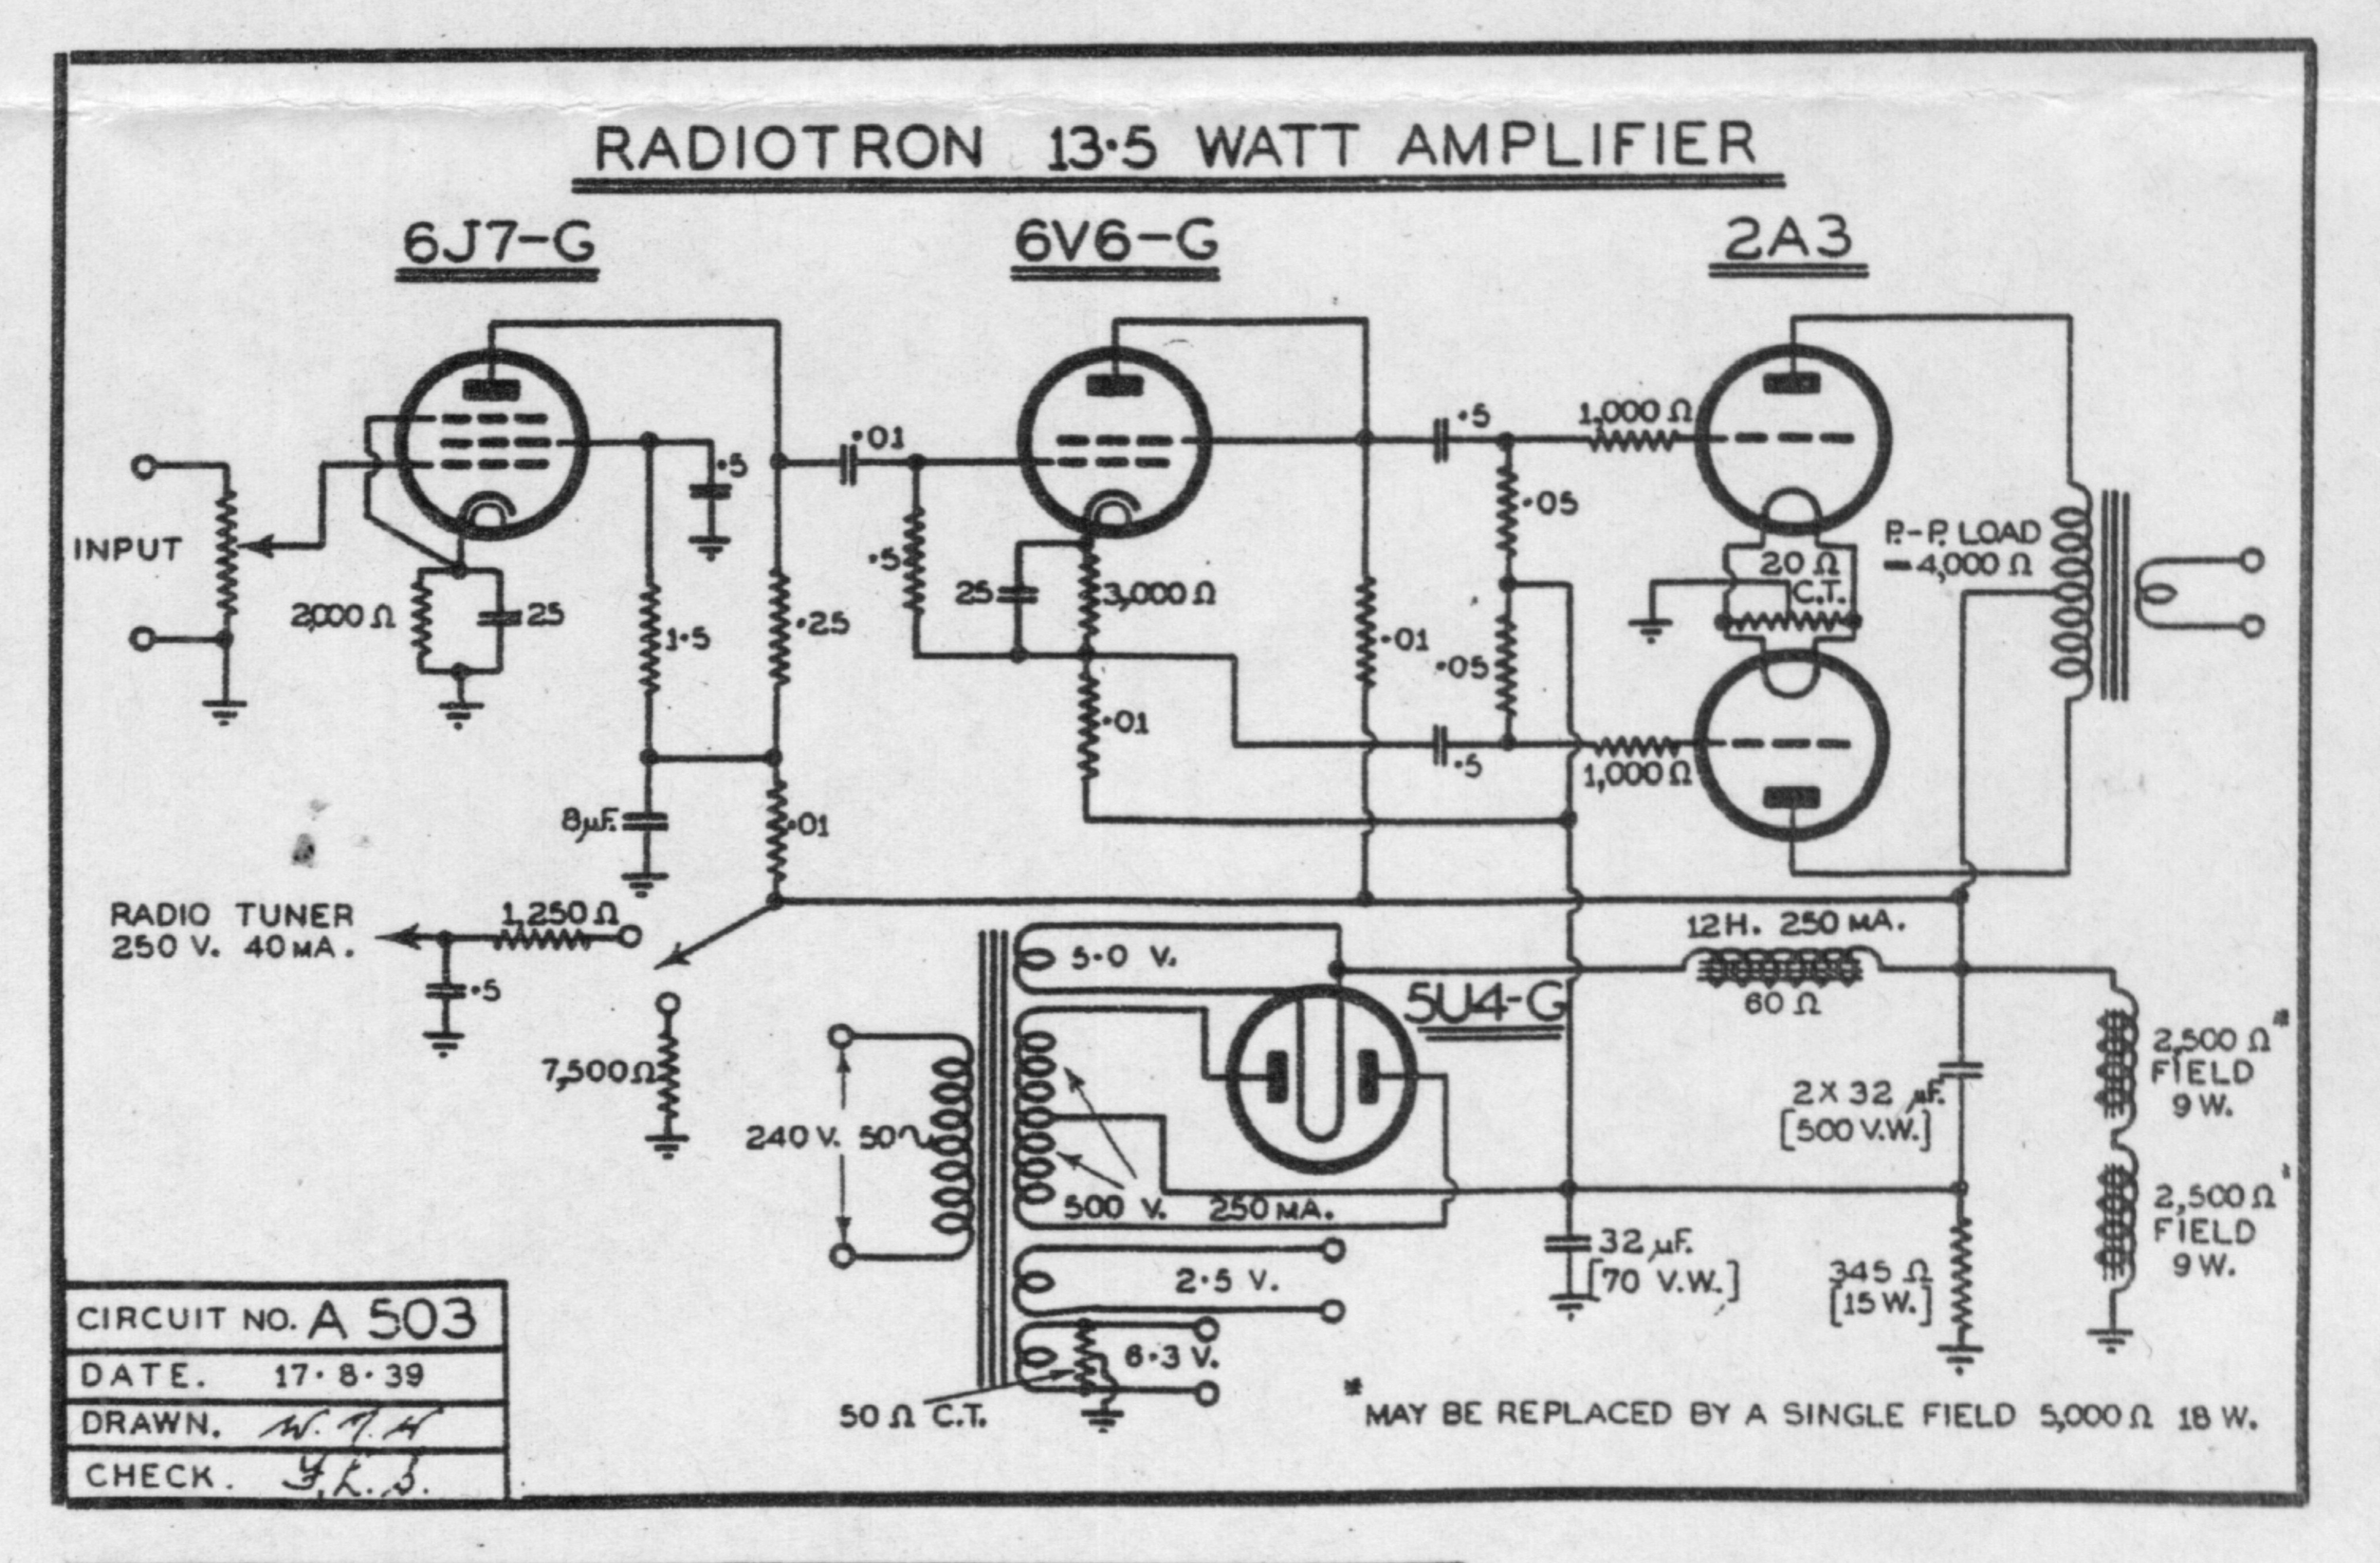 AWA A503 circuit